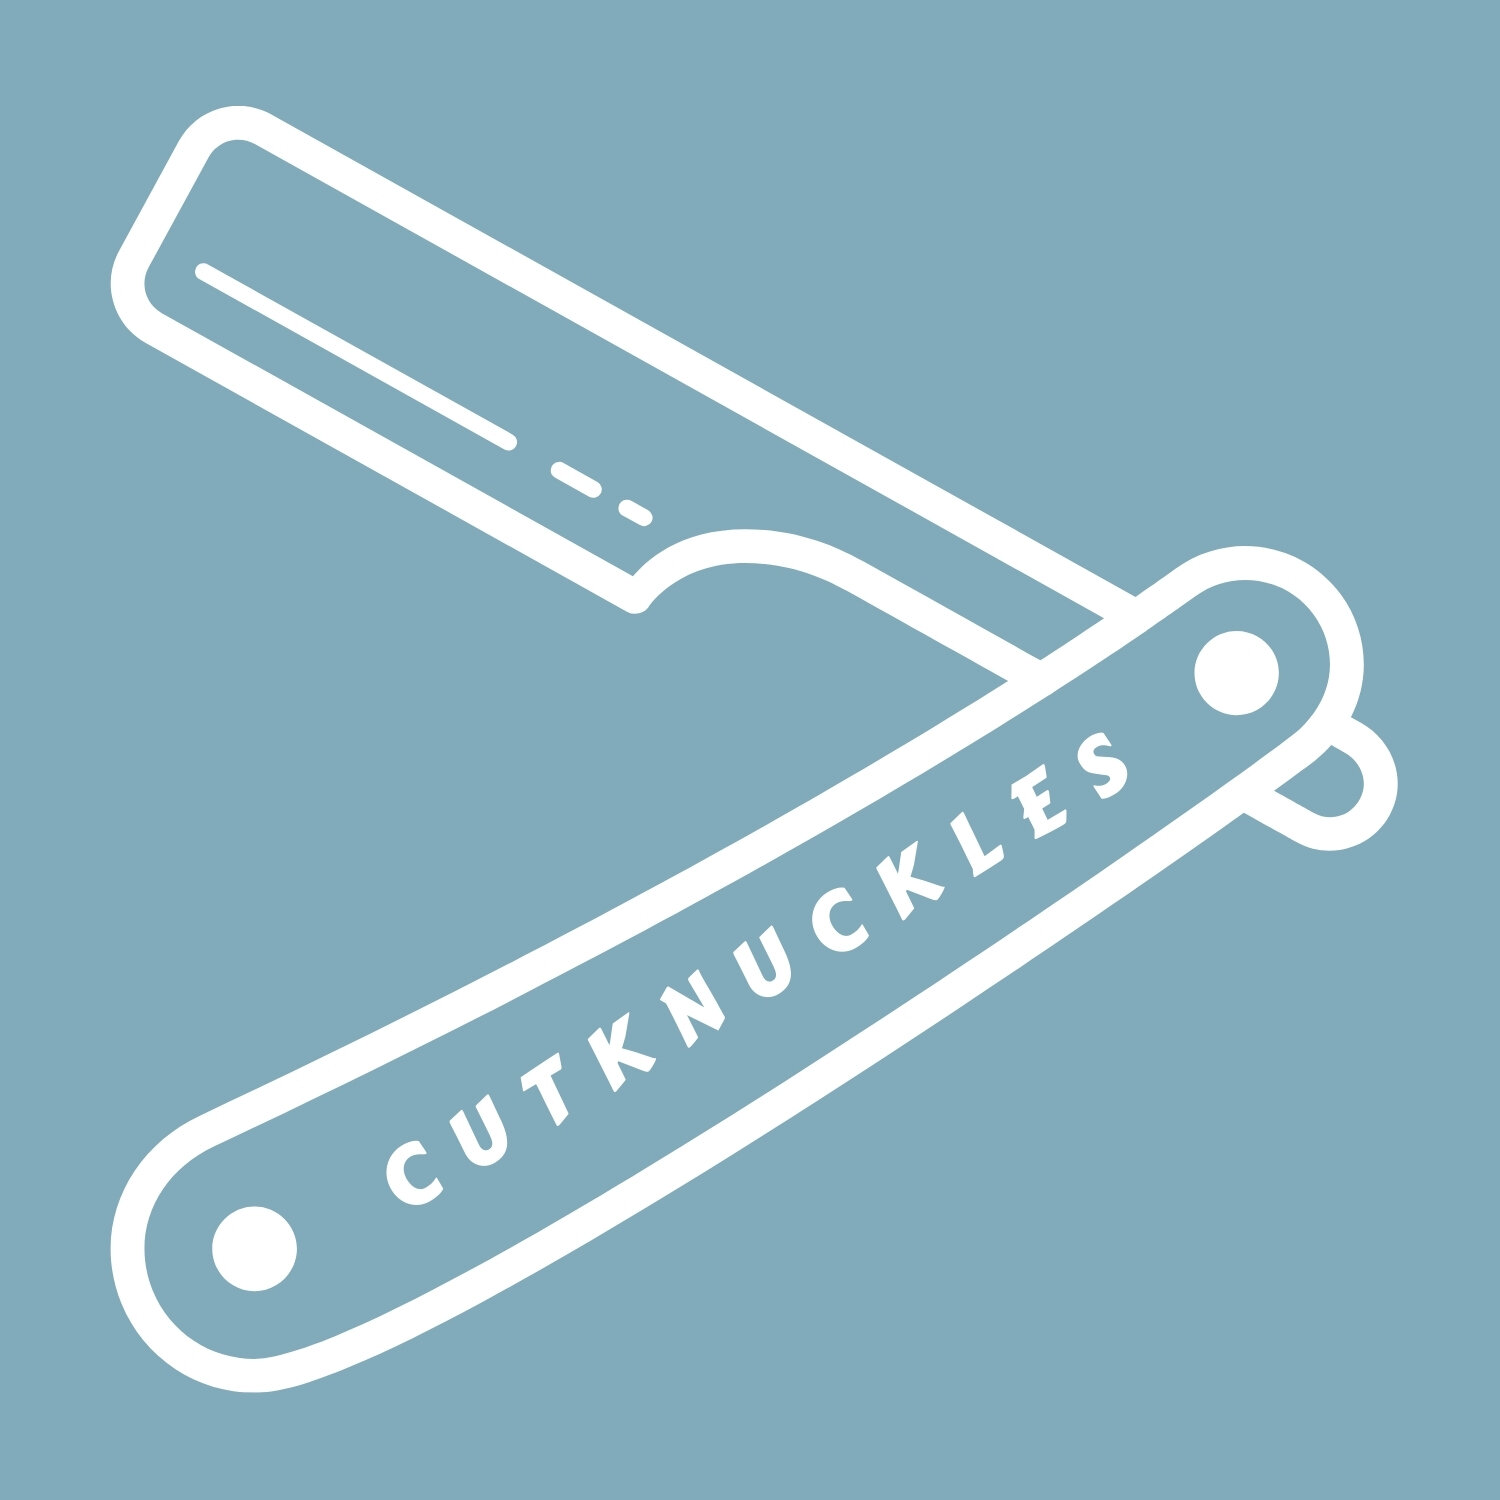 Cutknuckles Barber